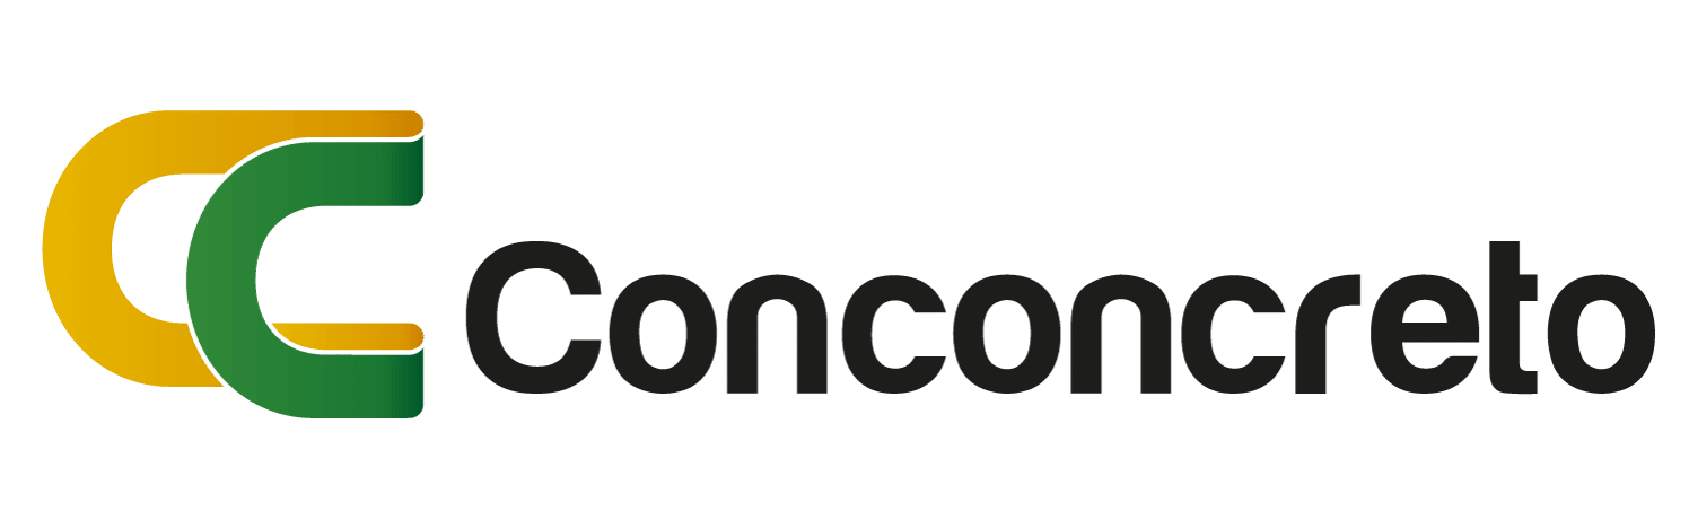 CONCONCRETO-01